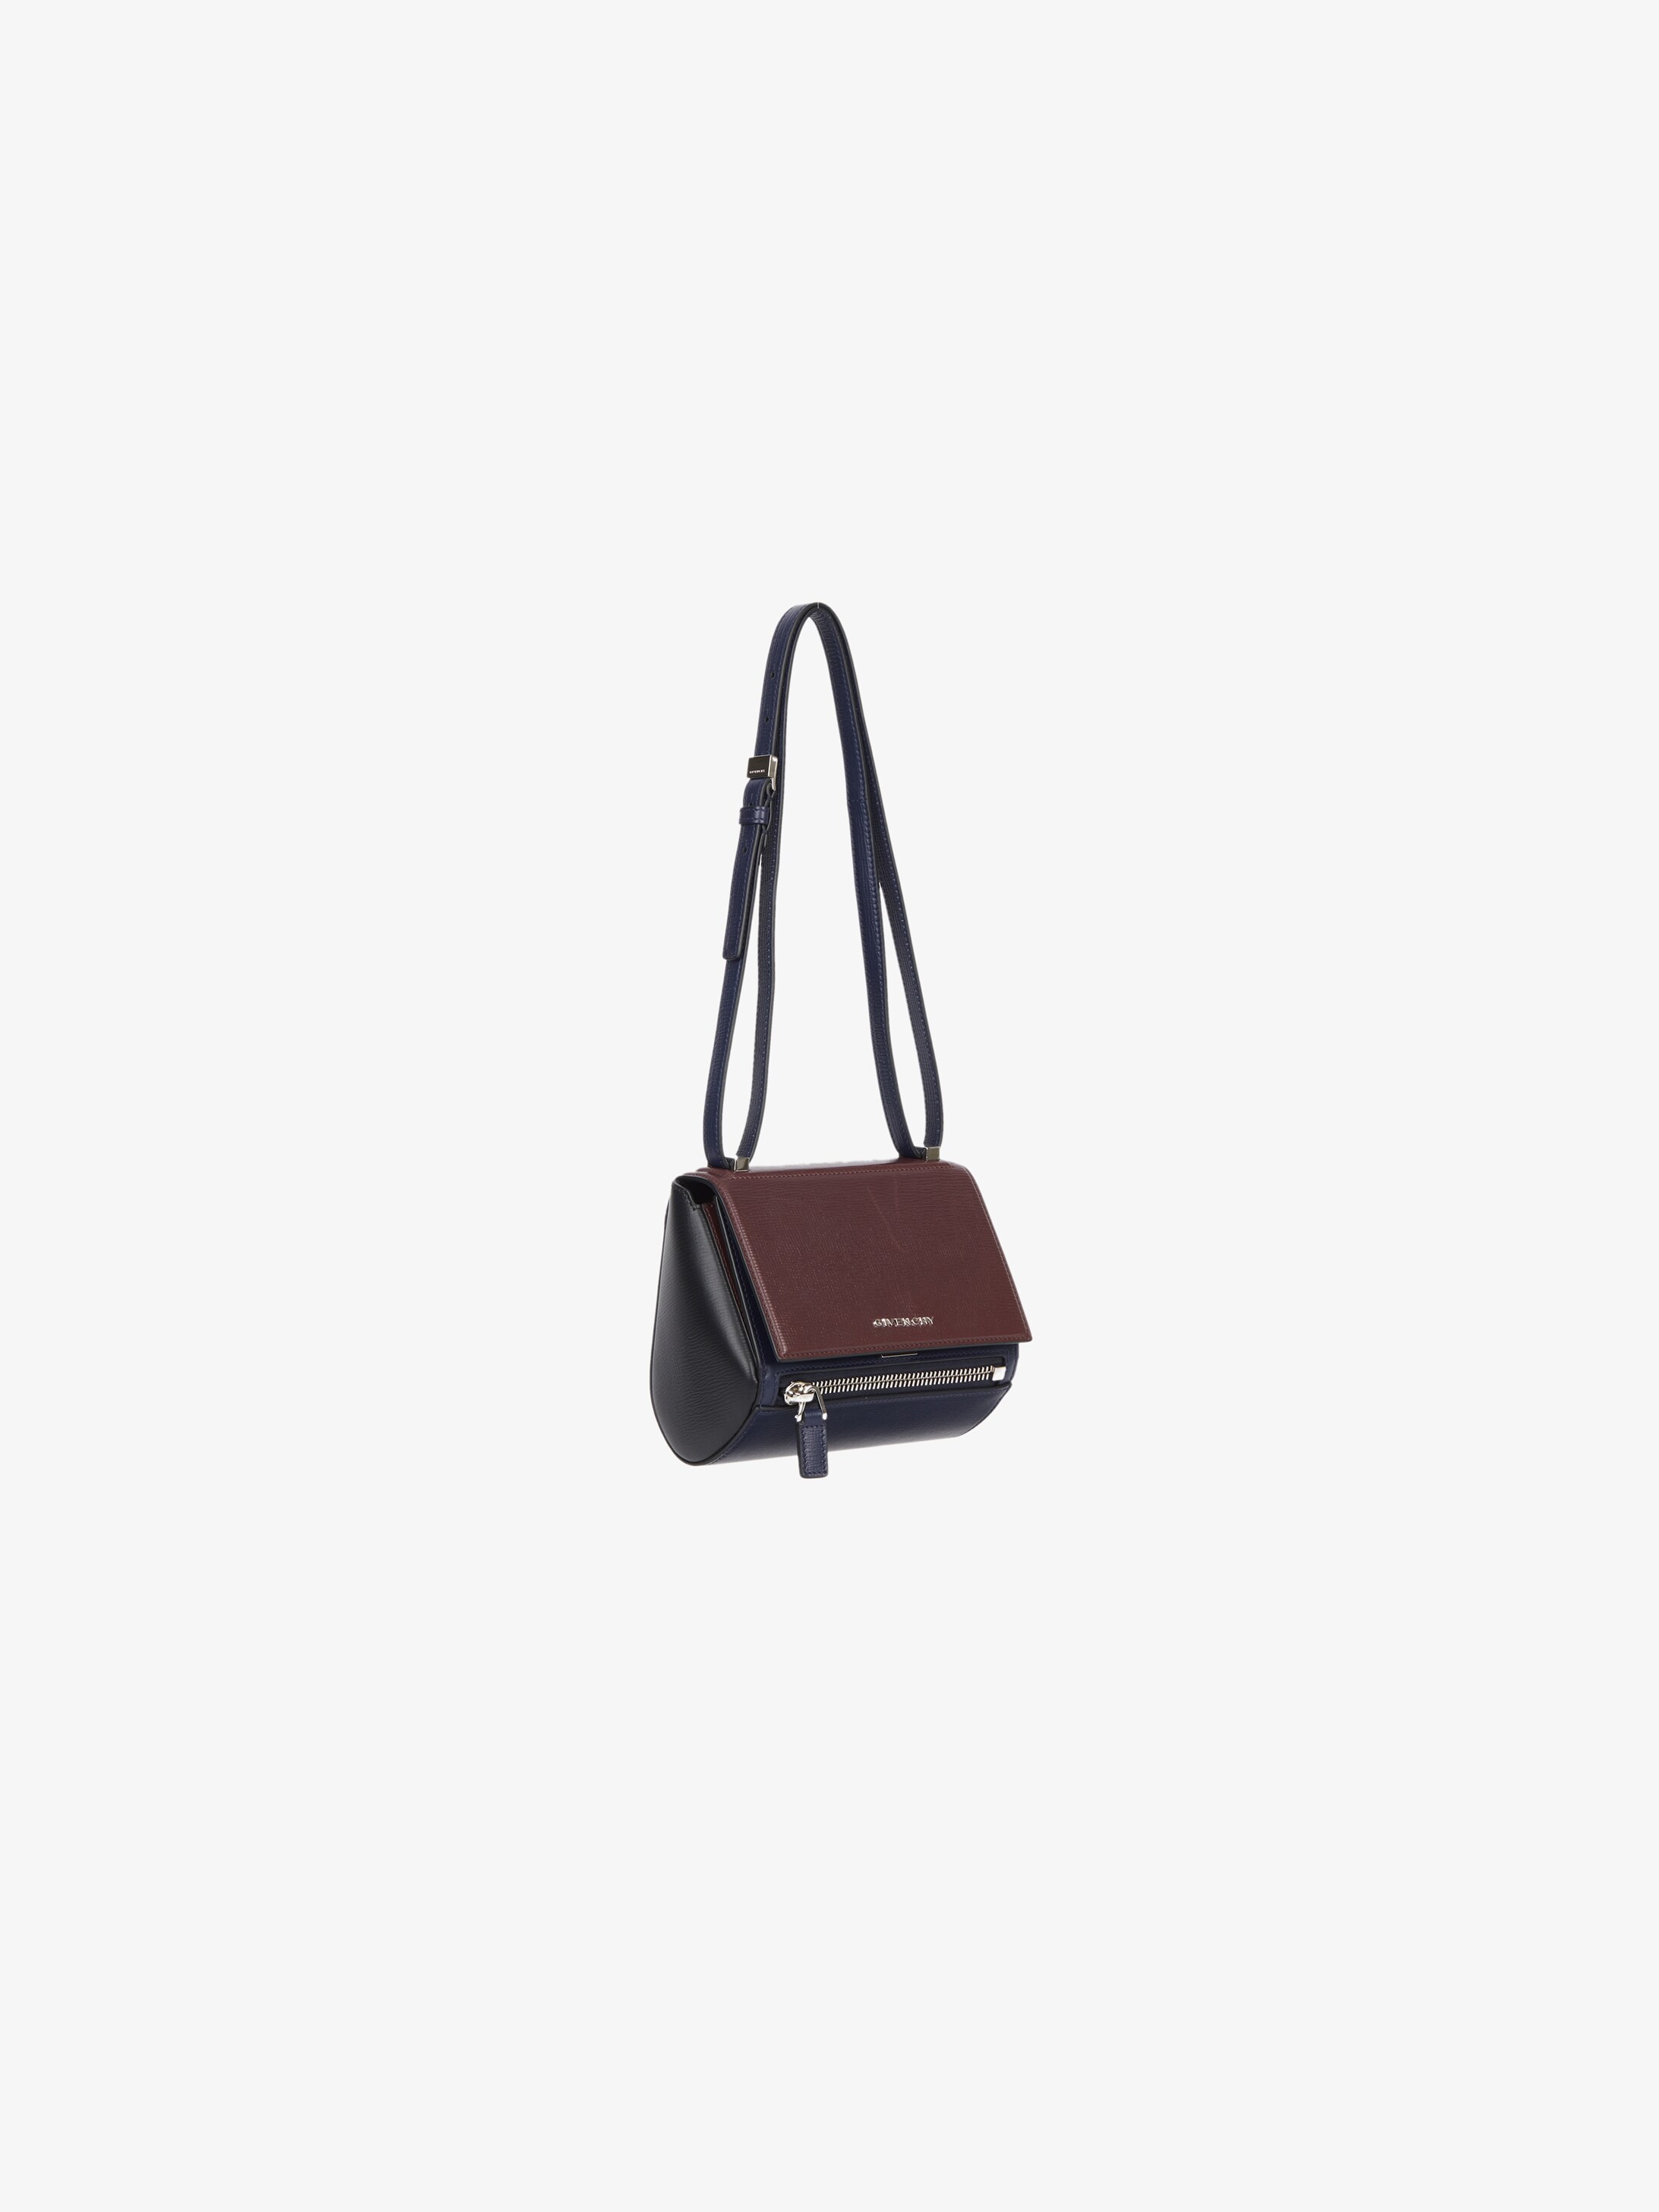 Givenchy Tricolor mini Pandora Box bag 